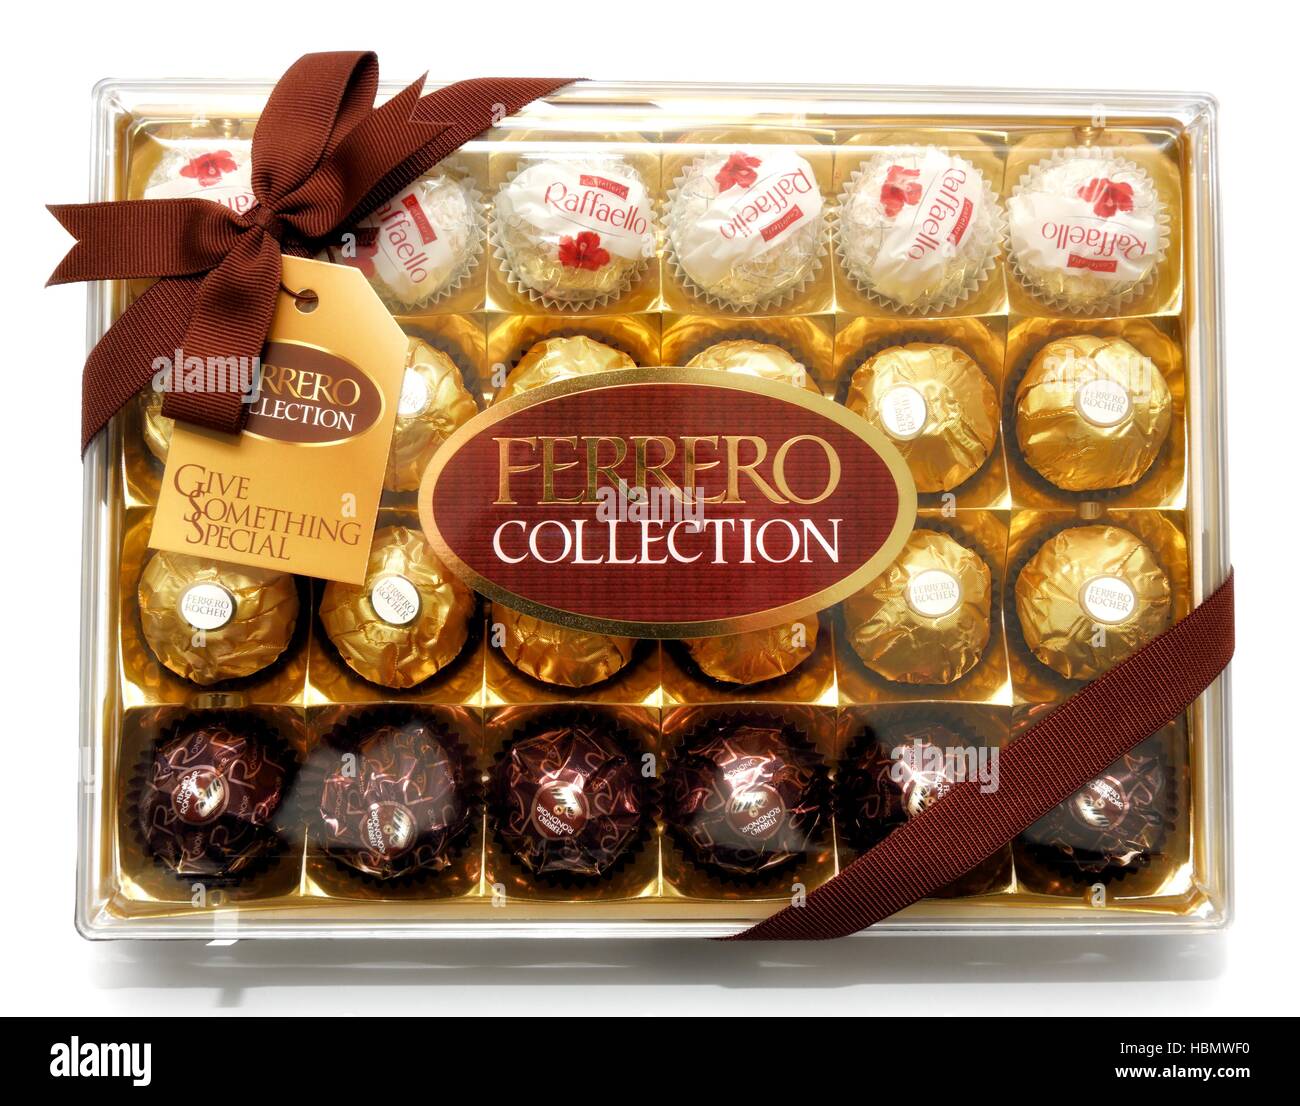 Ferrero Rocher Ferrero Collection T24, Chocolate, Ferrero, Ferrer